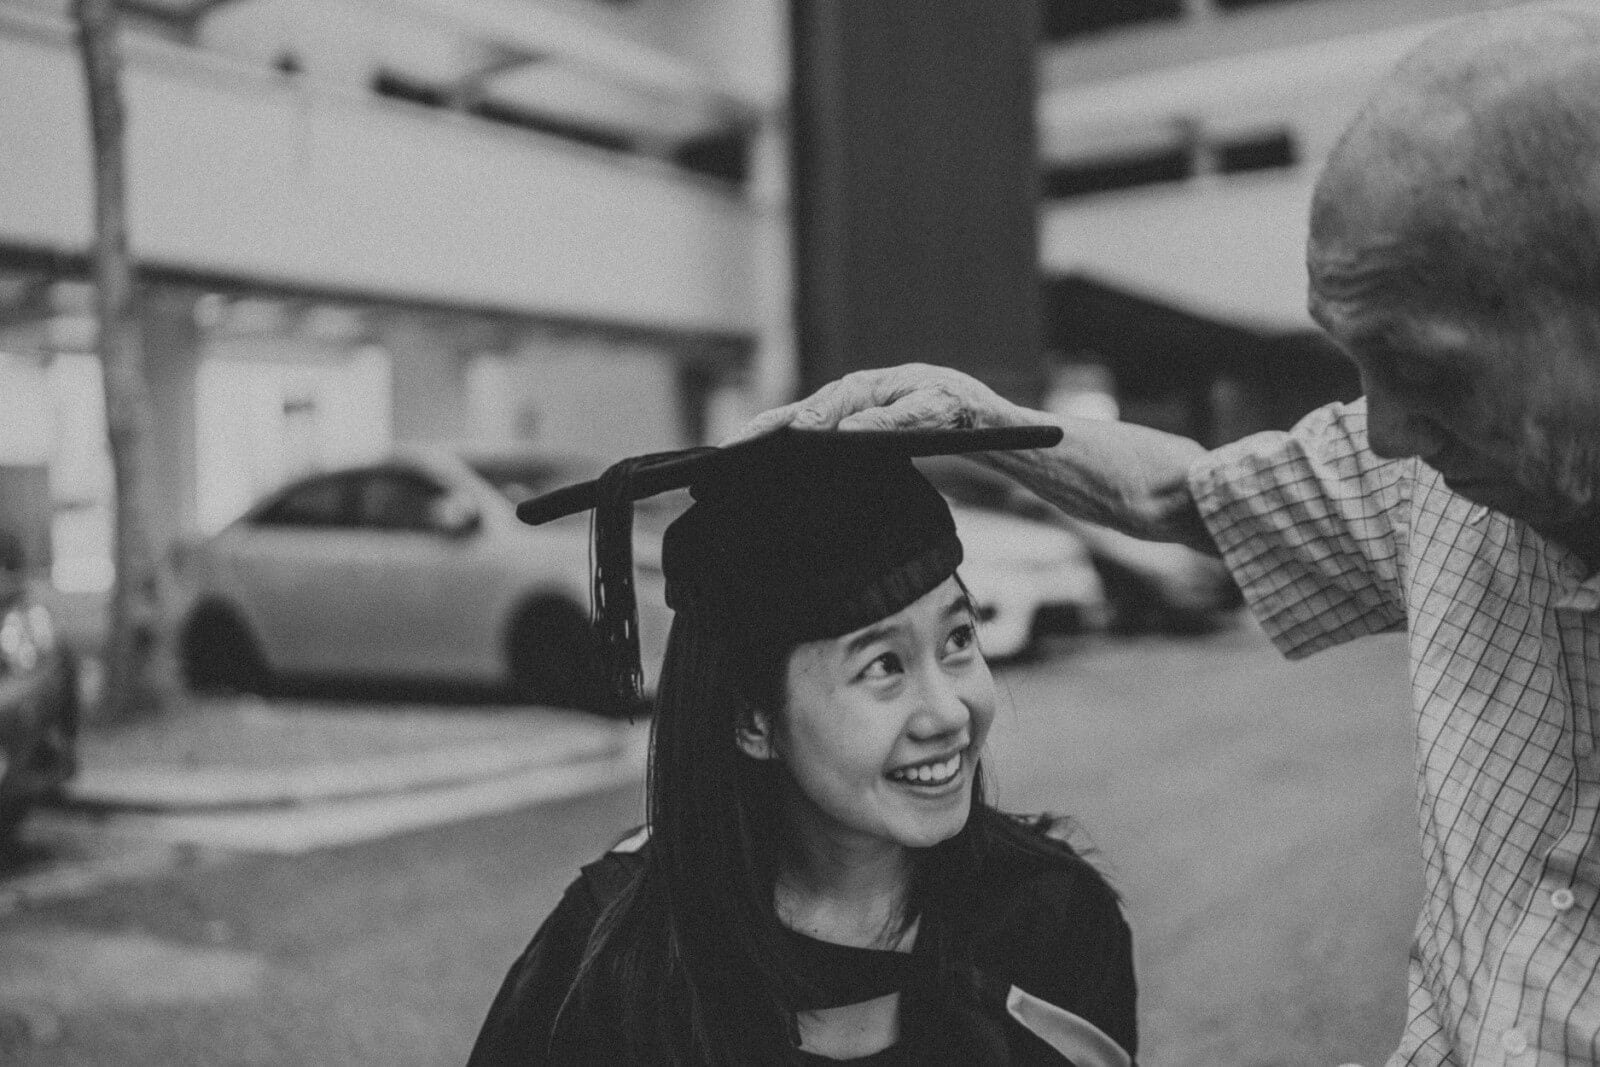 Heartwarming Photos Of S'porean Student Who Flew Back Home To Take Grad Photos With Grandpa Go Viral - World Of Buzz 4